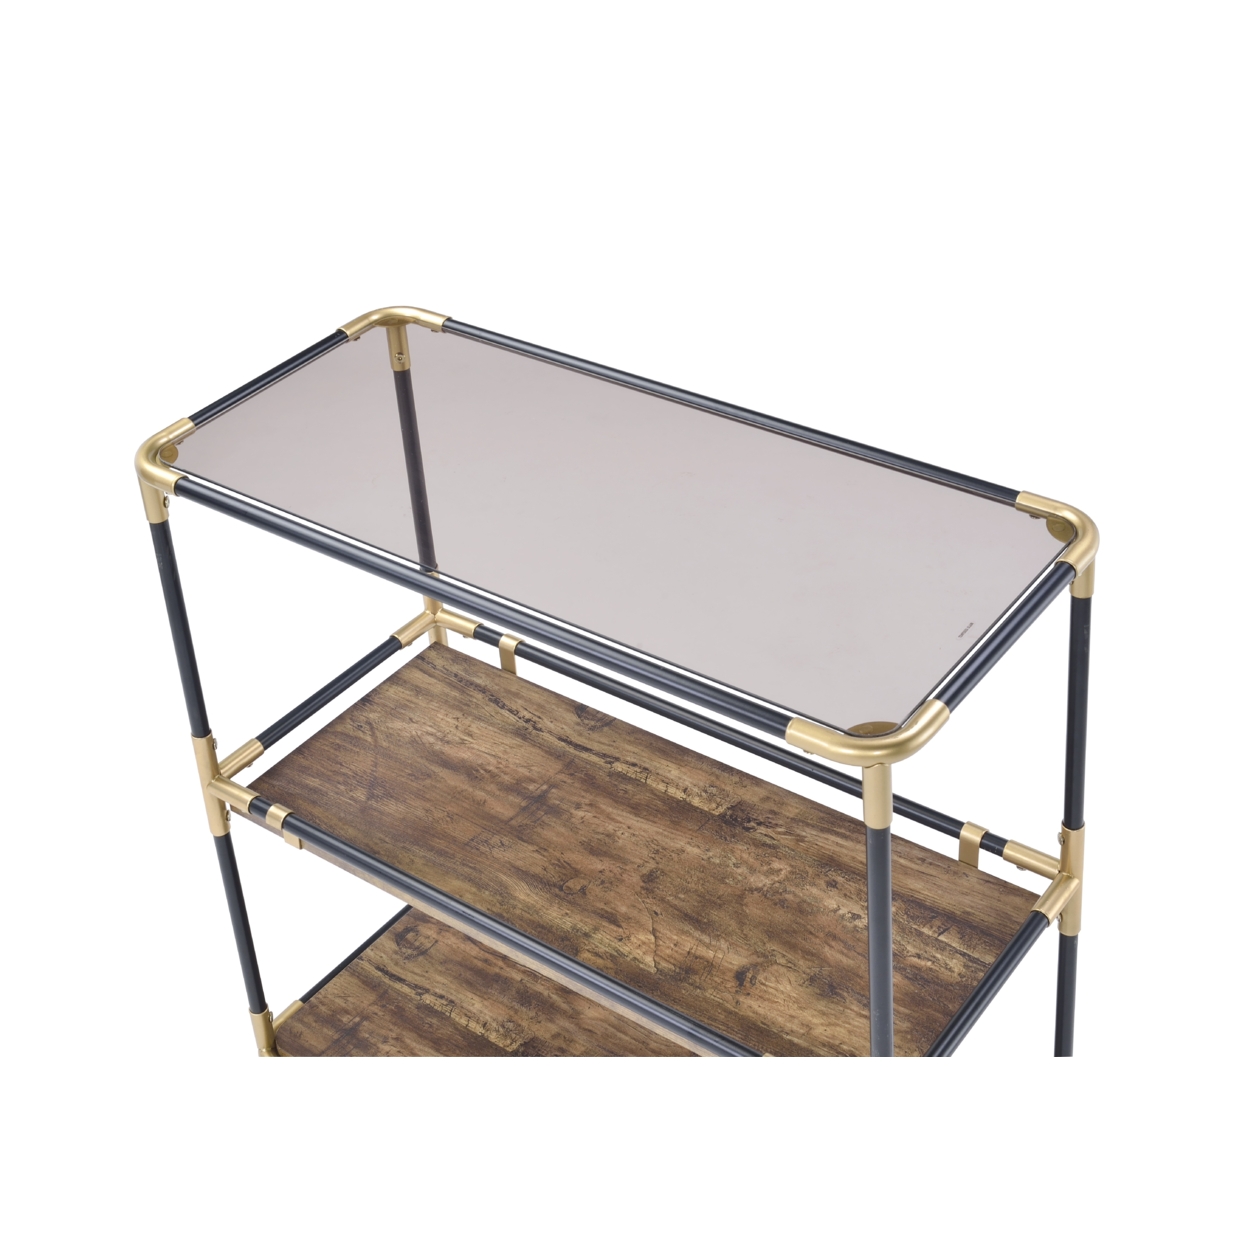 Rechange Glass Top Console Table Metal Tubular Framing And Wooden Shelves, Black And Brown- Saltoro Sherpi